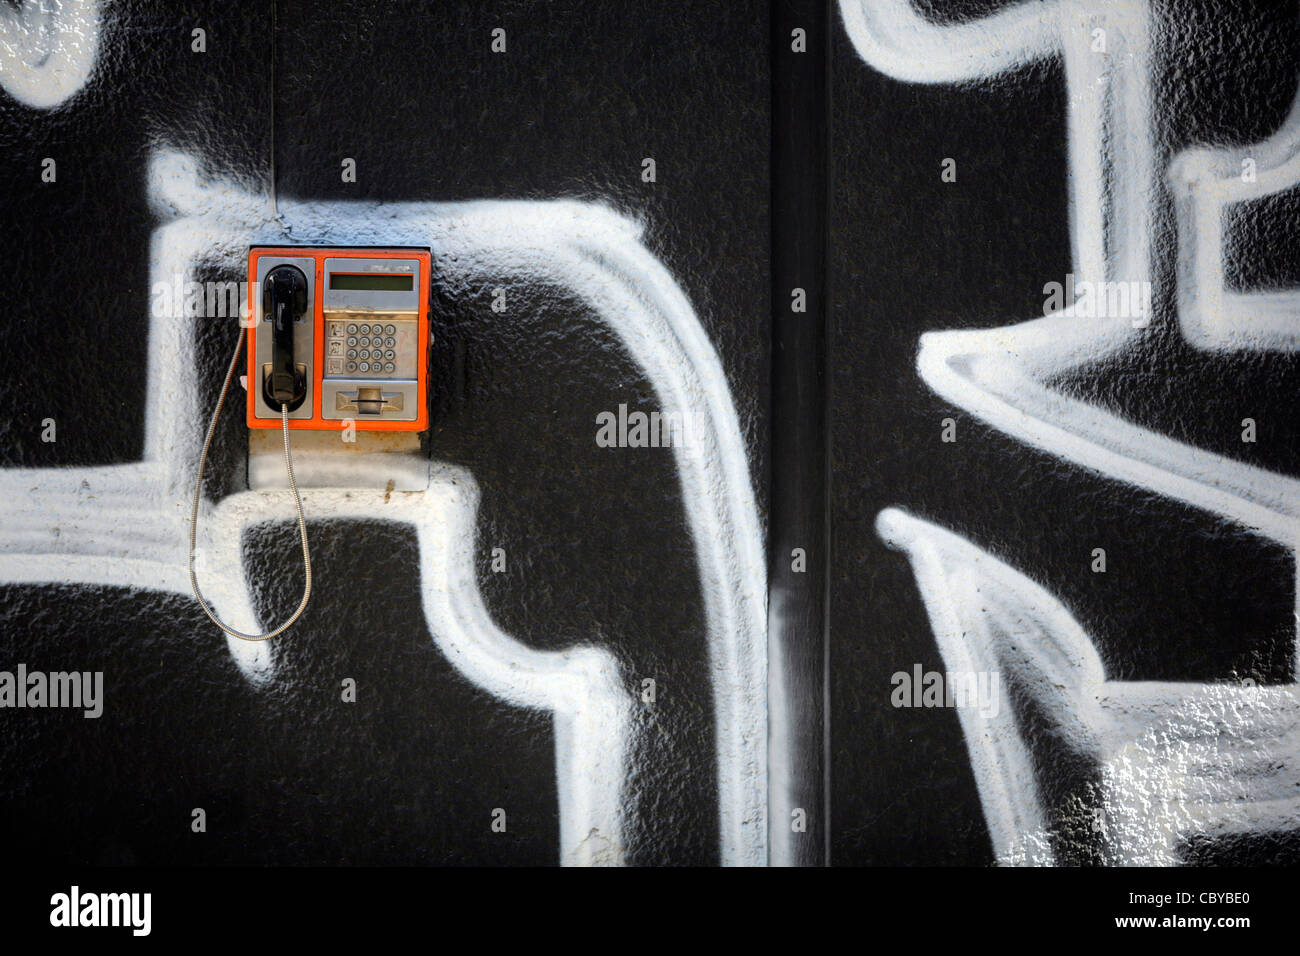 Orange public telephone on a graffiti wall Stock Photo